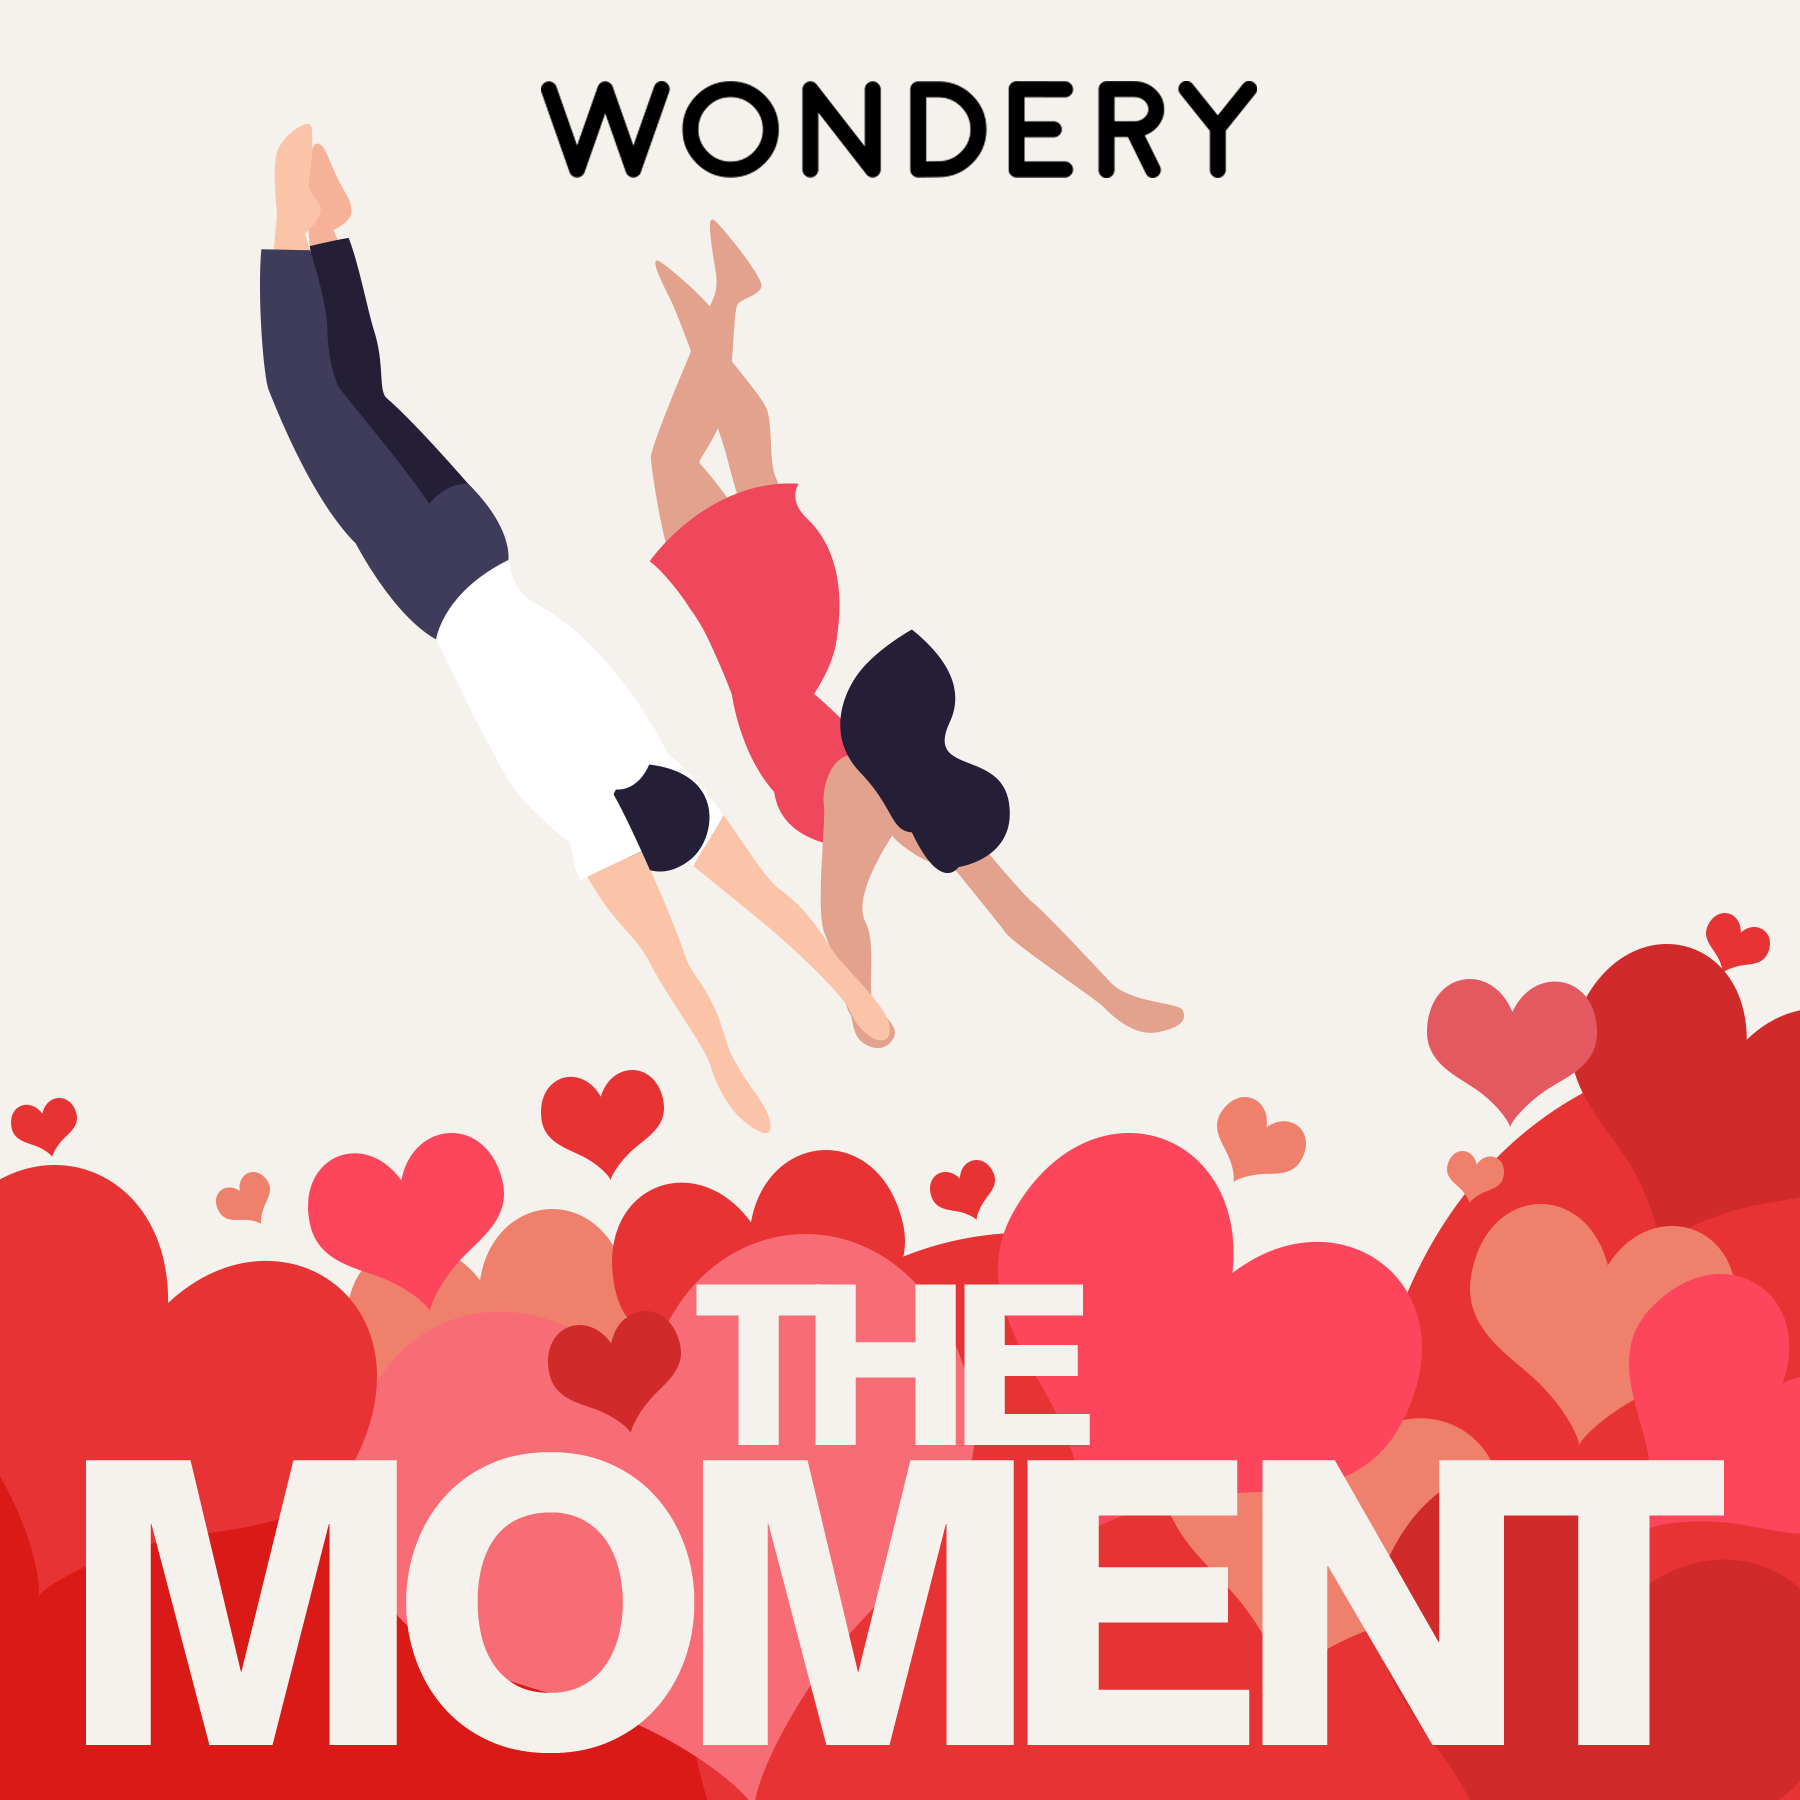 https://wondery.com/wp-content/uploads/2019/07/the-moment-artwork-12.png